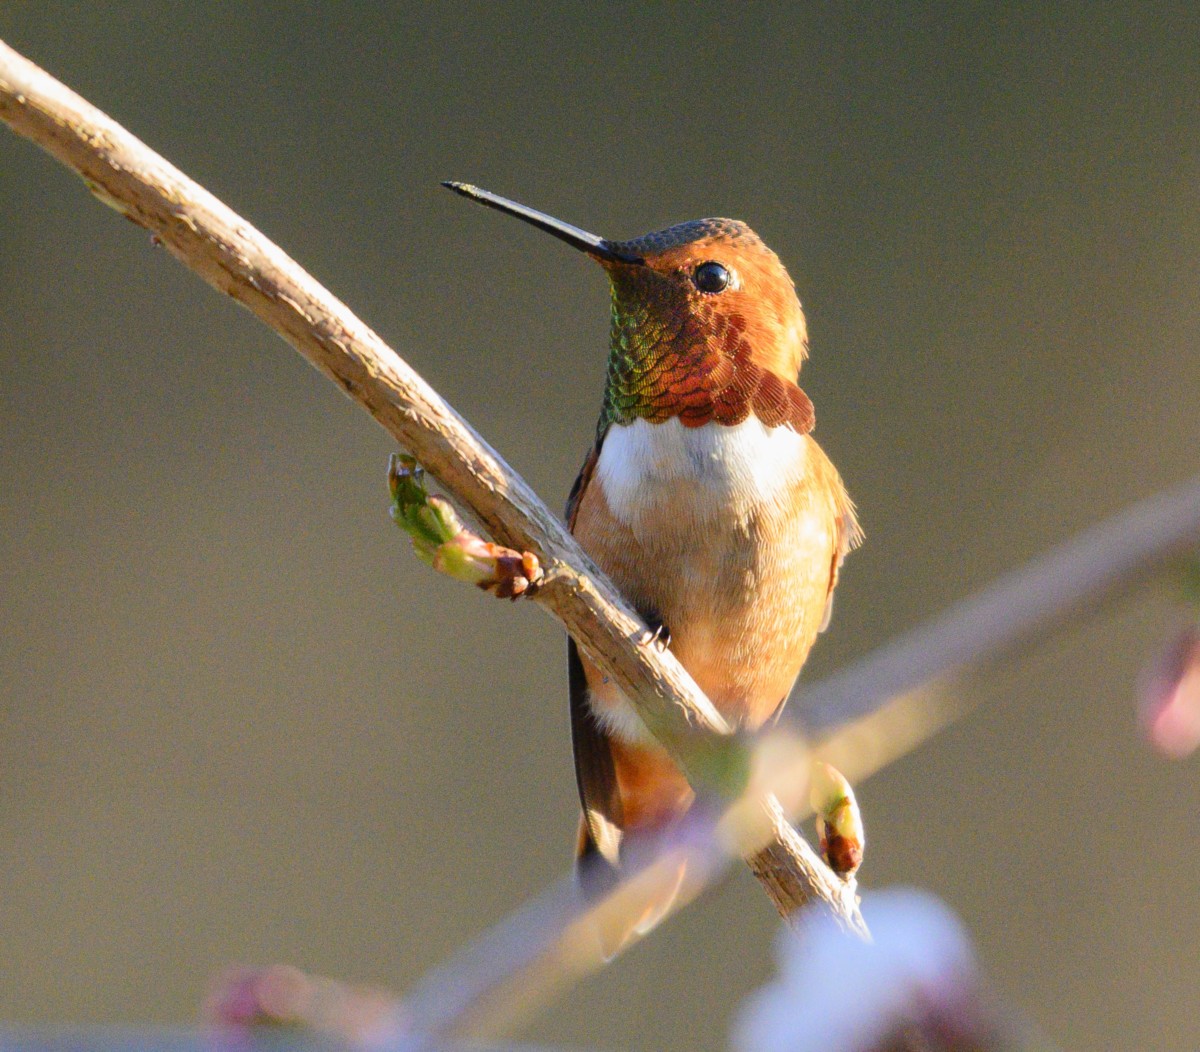 How to Help Hummingbirds in Hot Weather